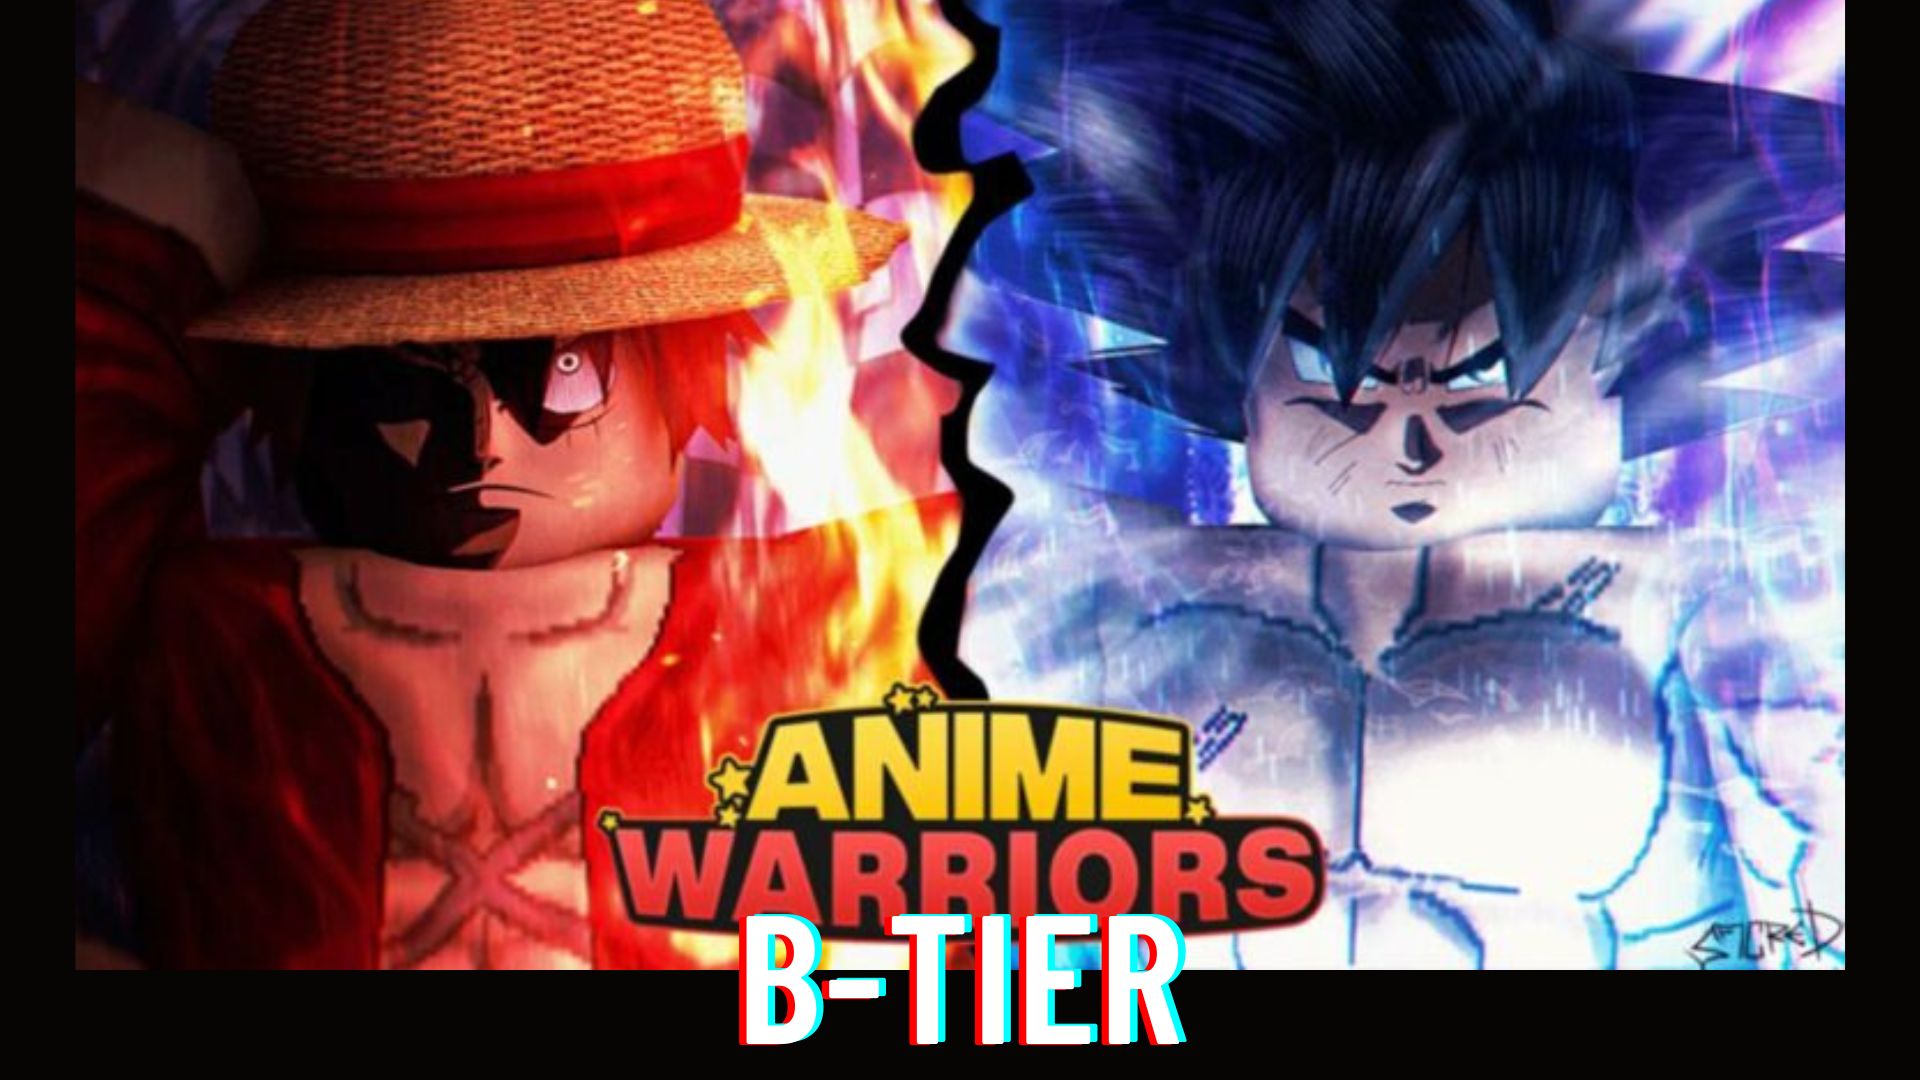 Anime warriors B